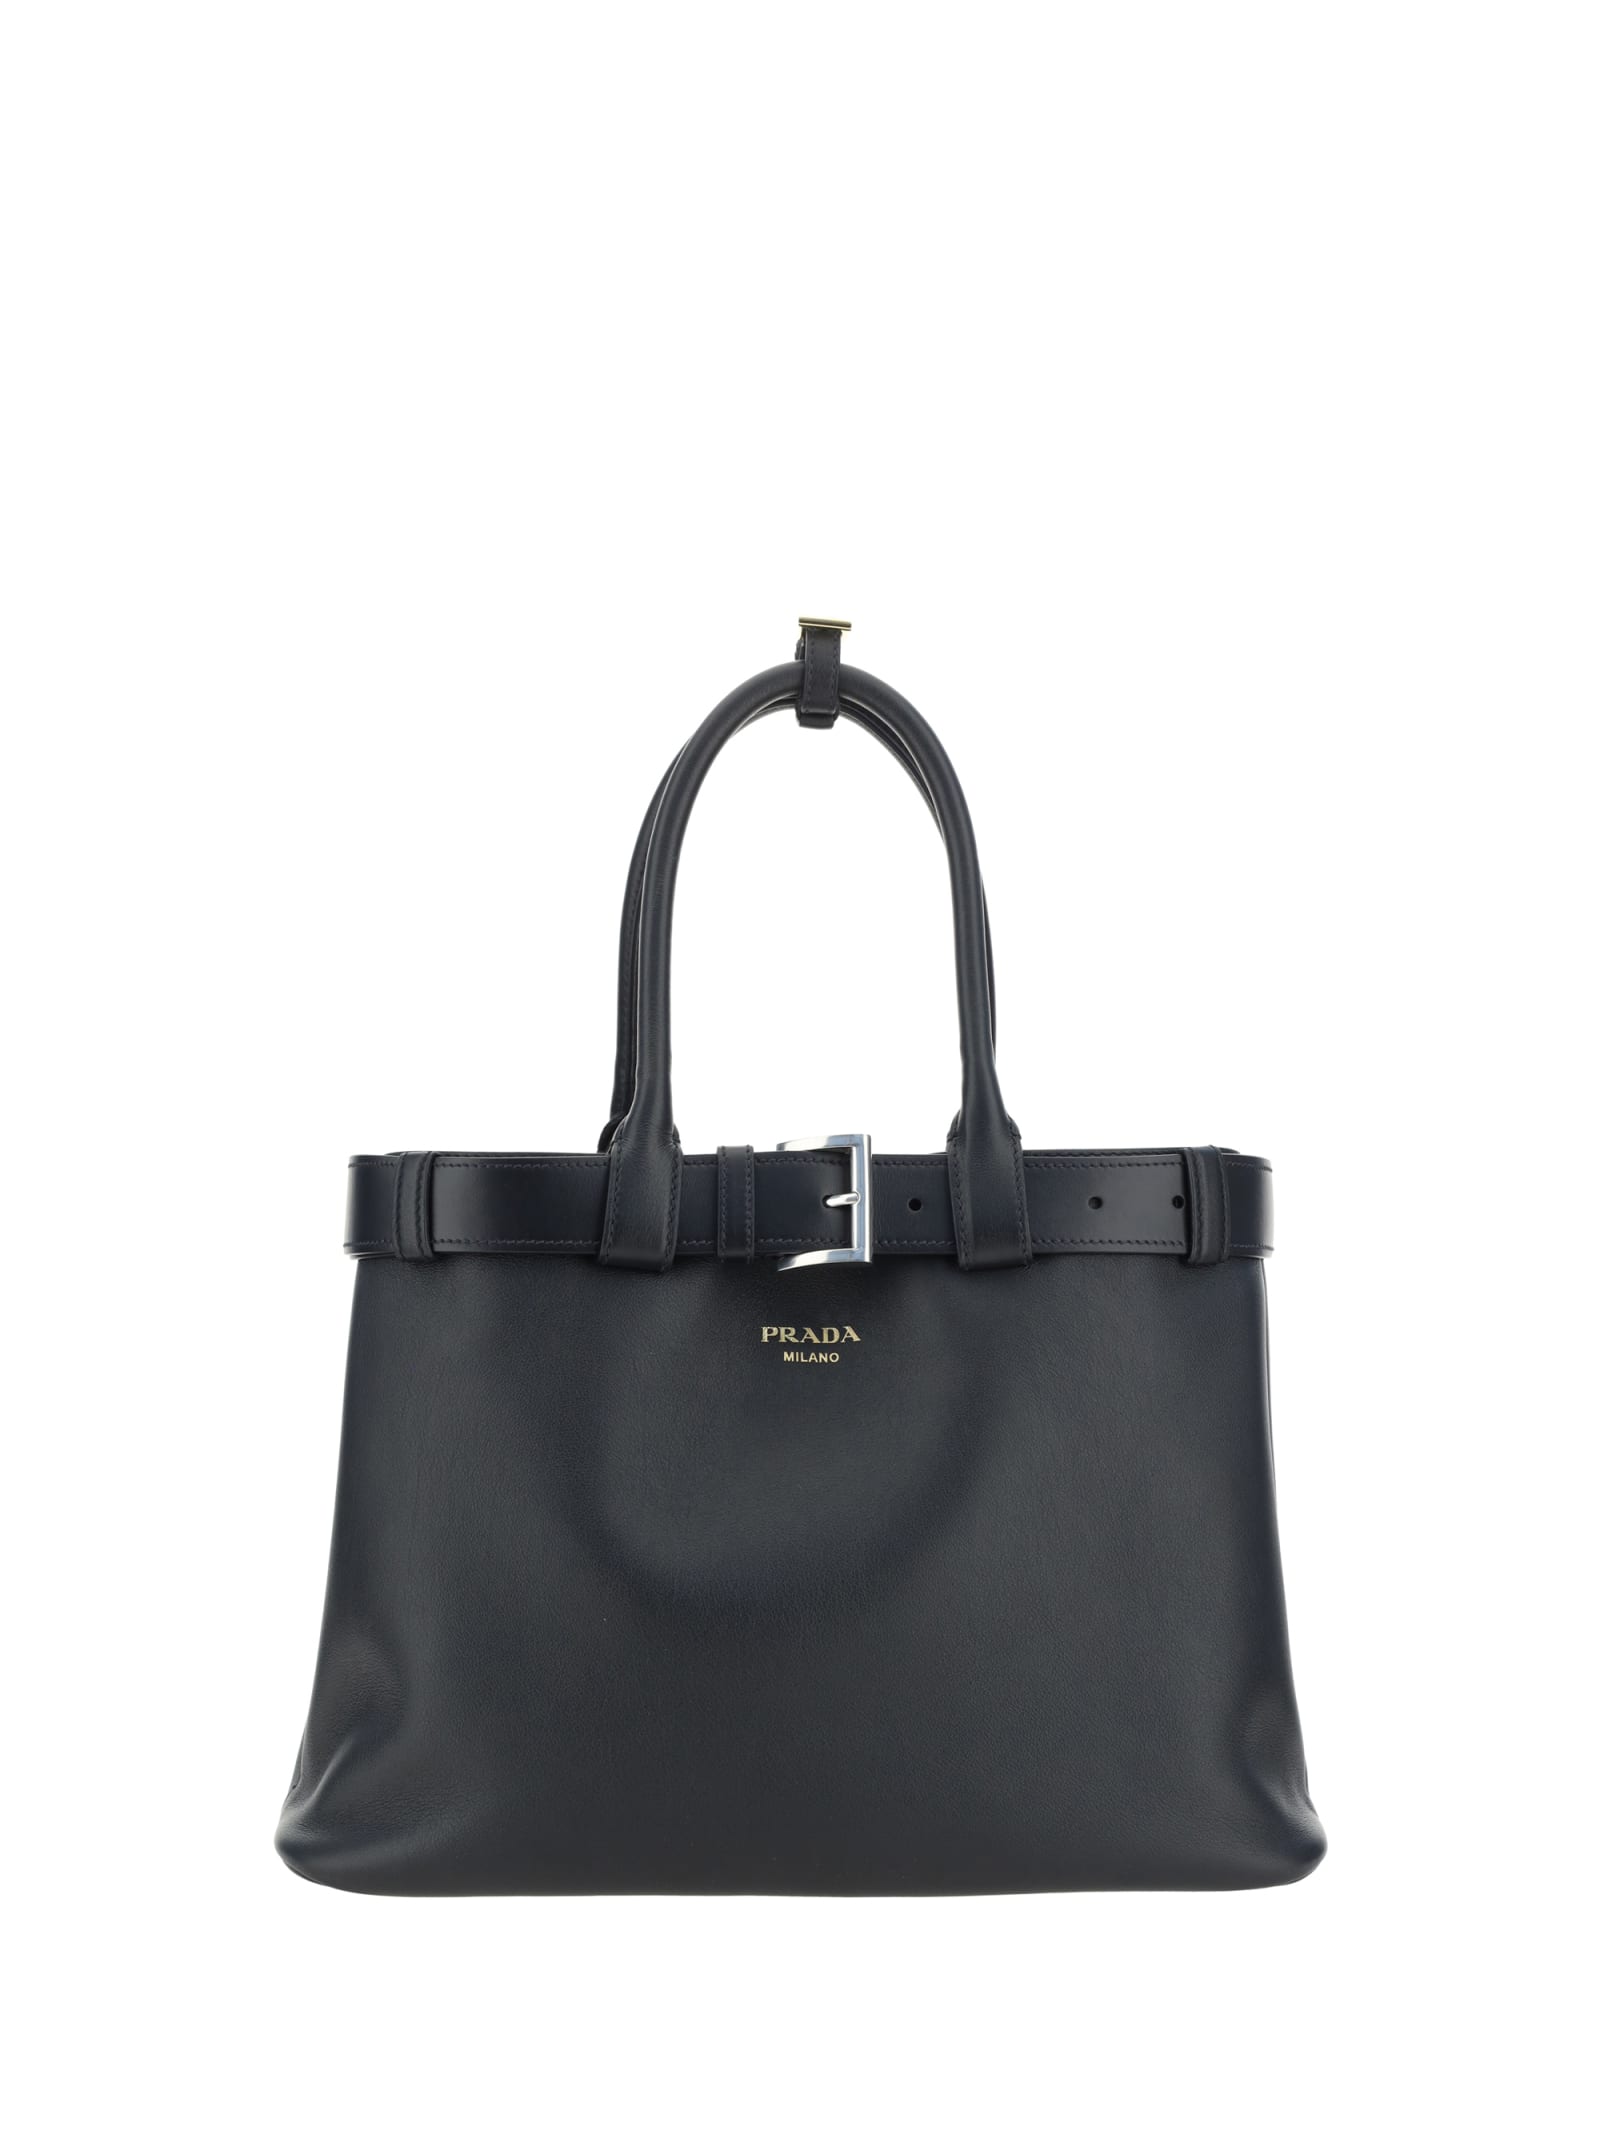 Prada Belted Handbag In Black